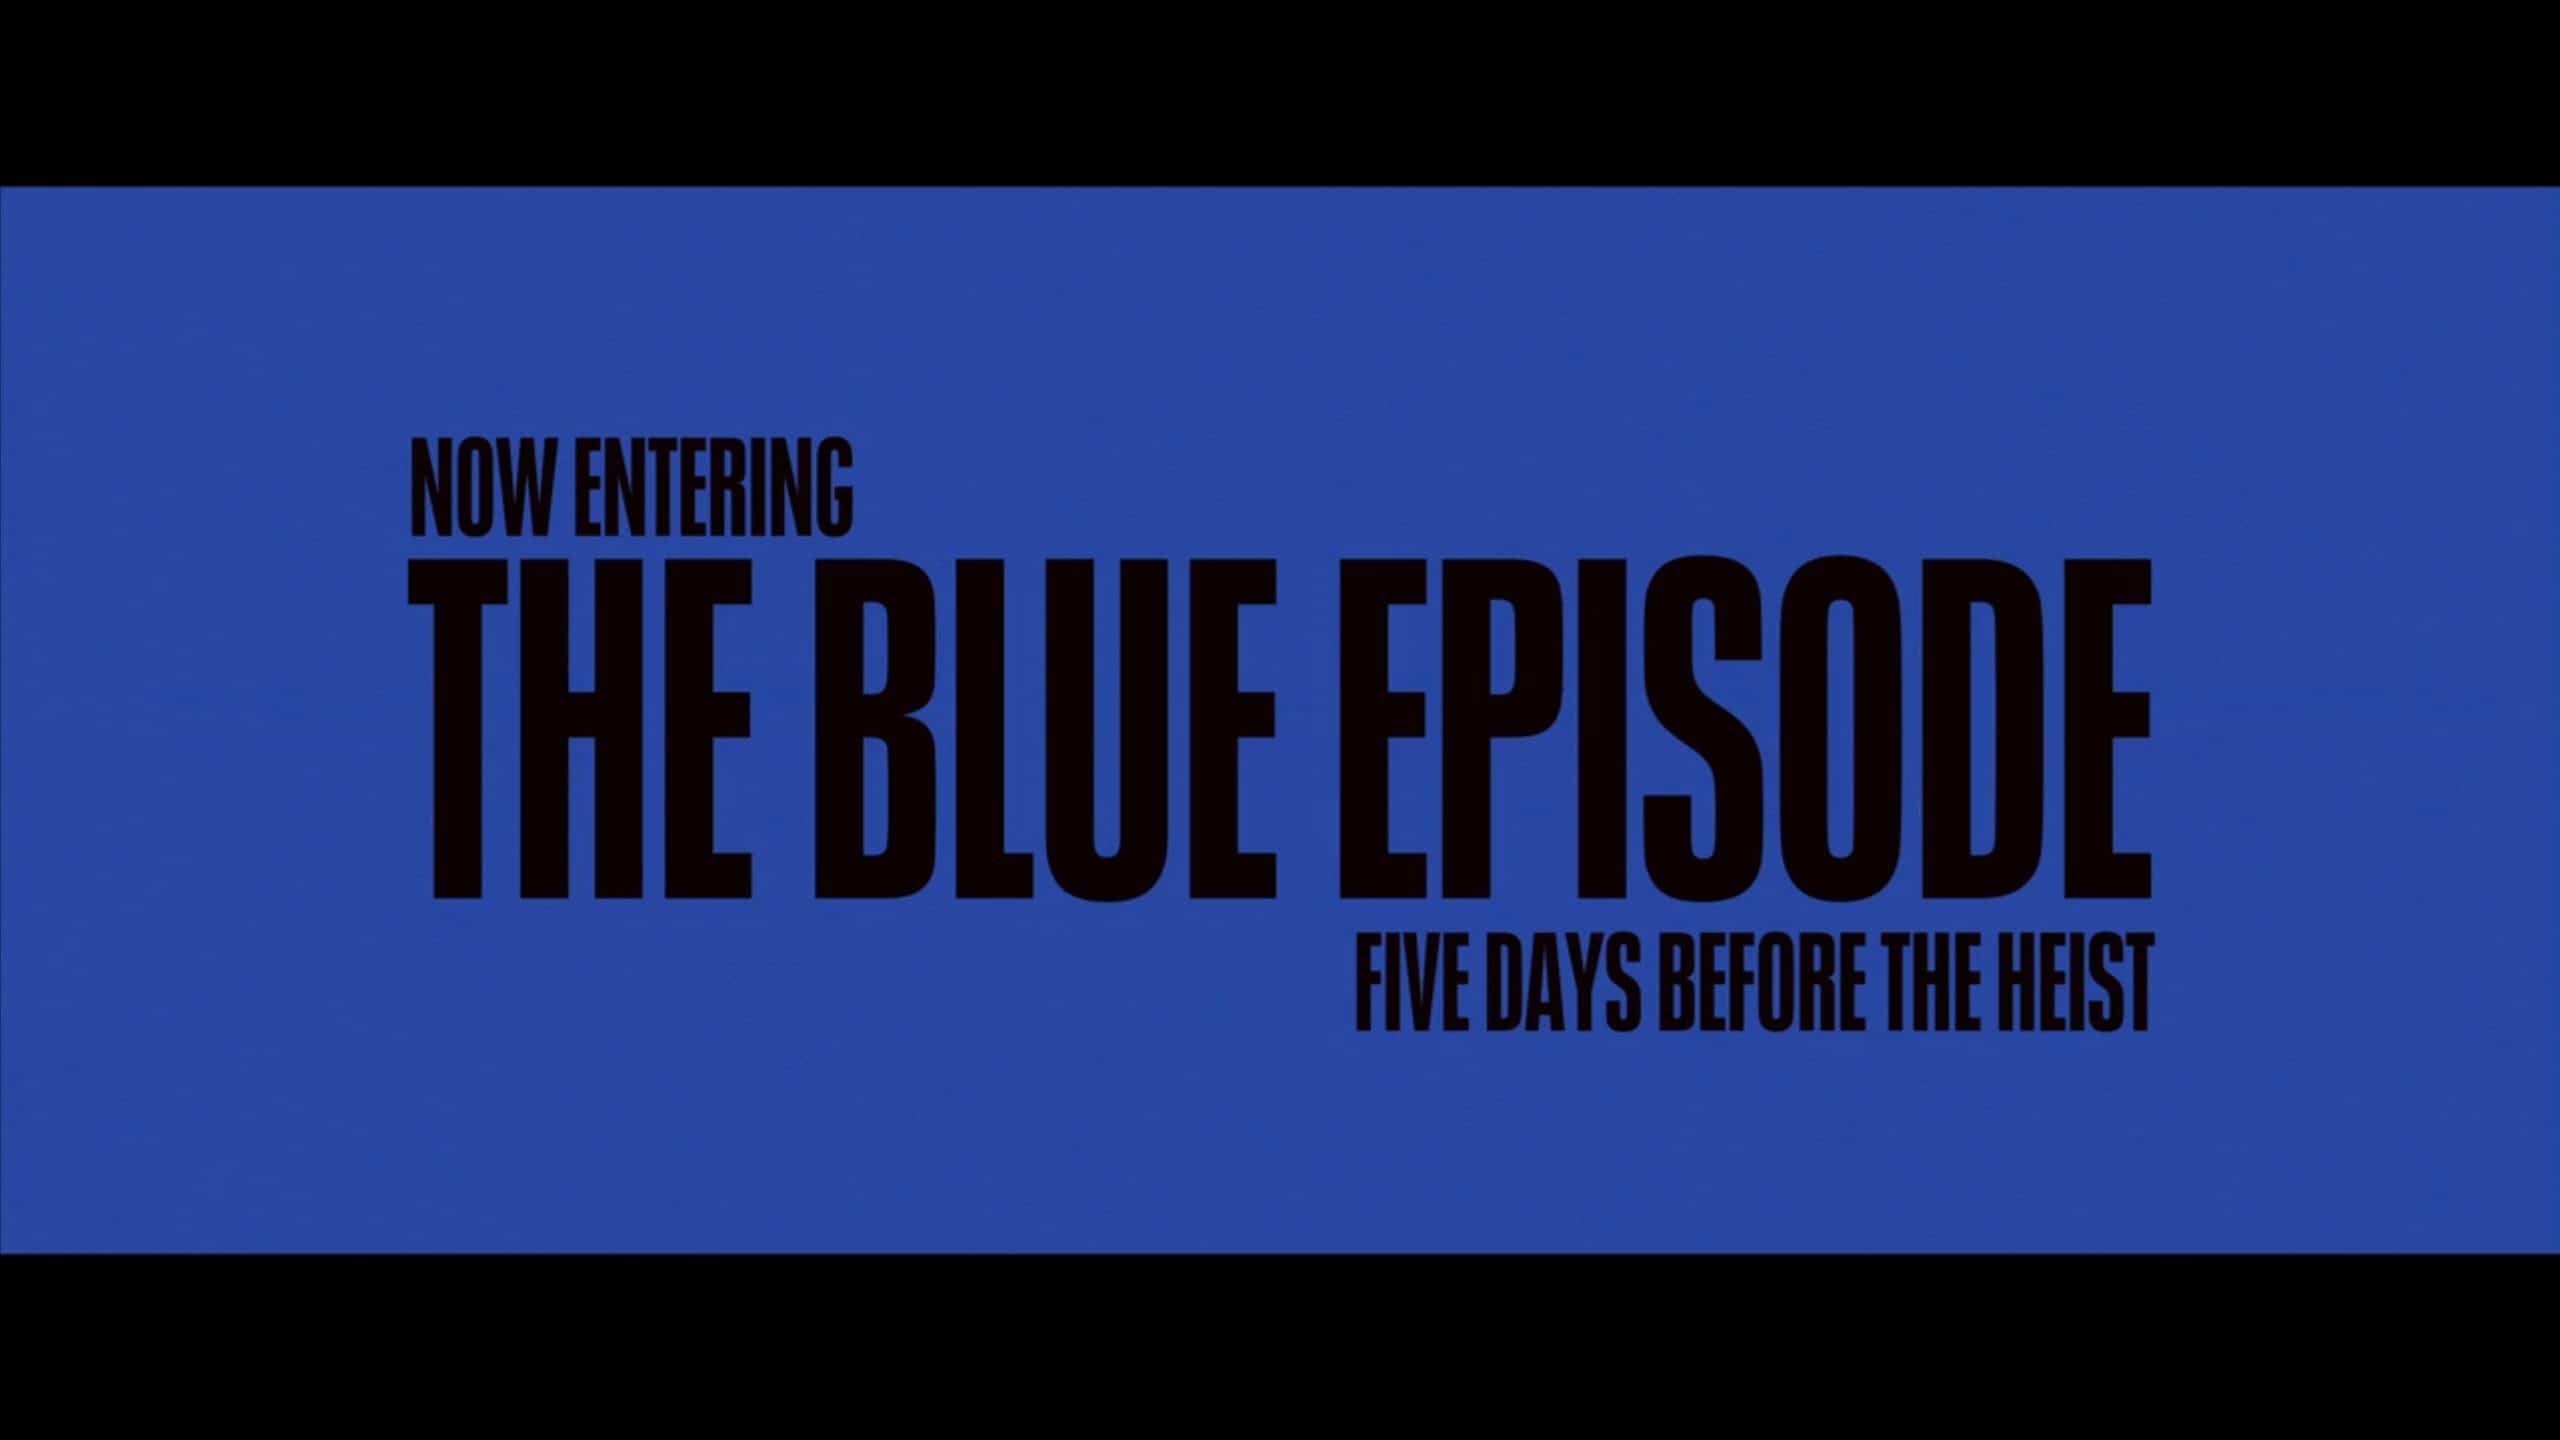 Kaleidoscope: Season 1/ Episode “Blue” – Recap/ Review (with Spoilers)